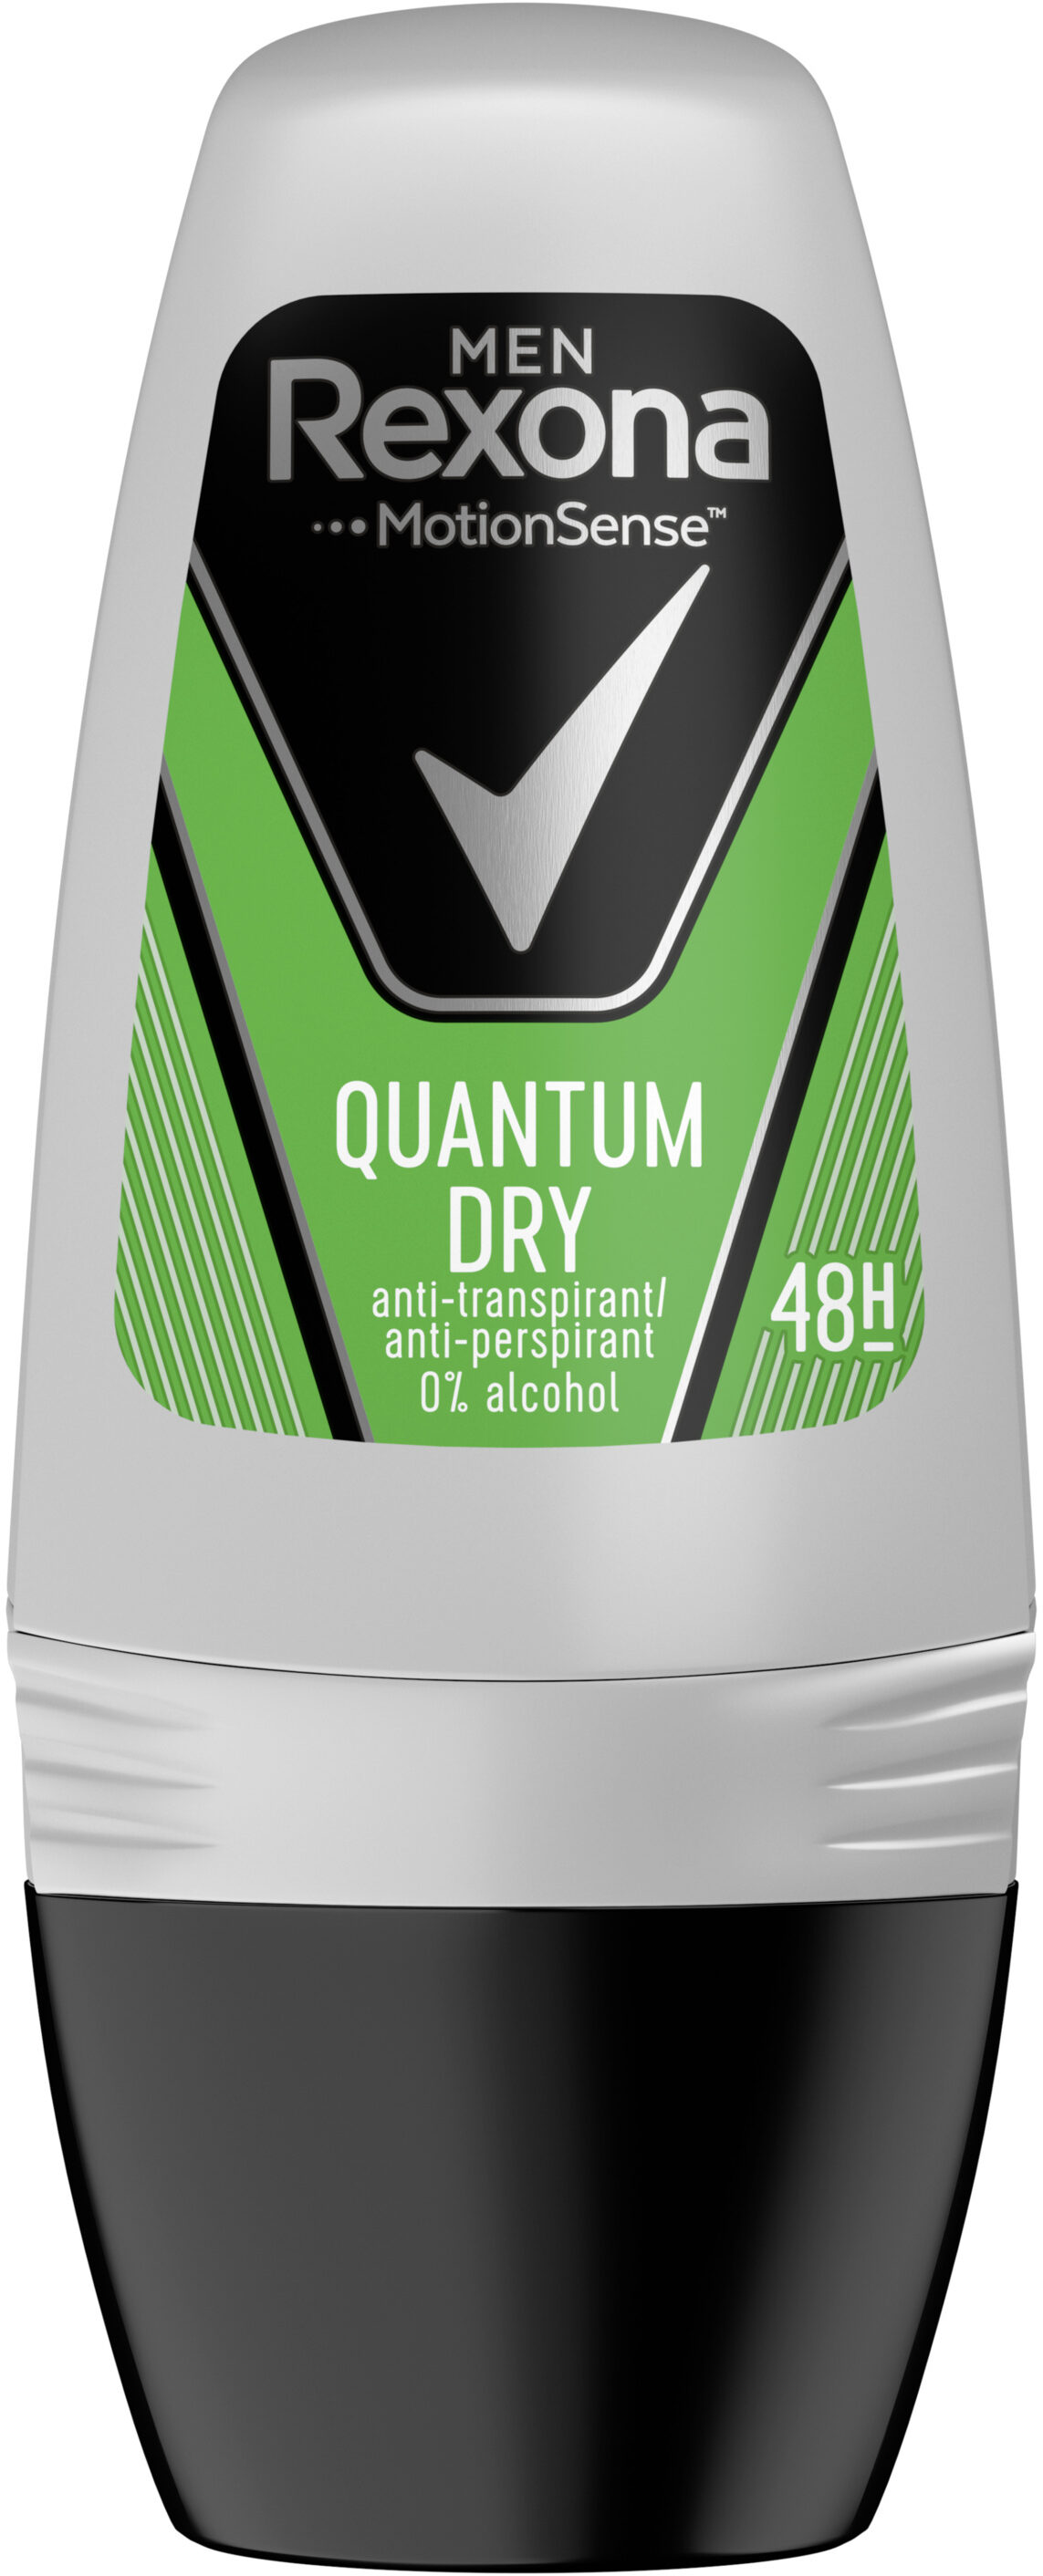 REXONA Men Déodorant Homme Bille Anti Transpirant Quantum Dry 48h - Product - fr